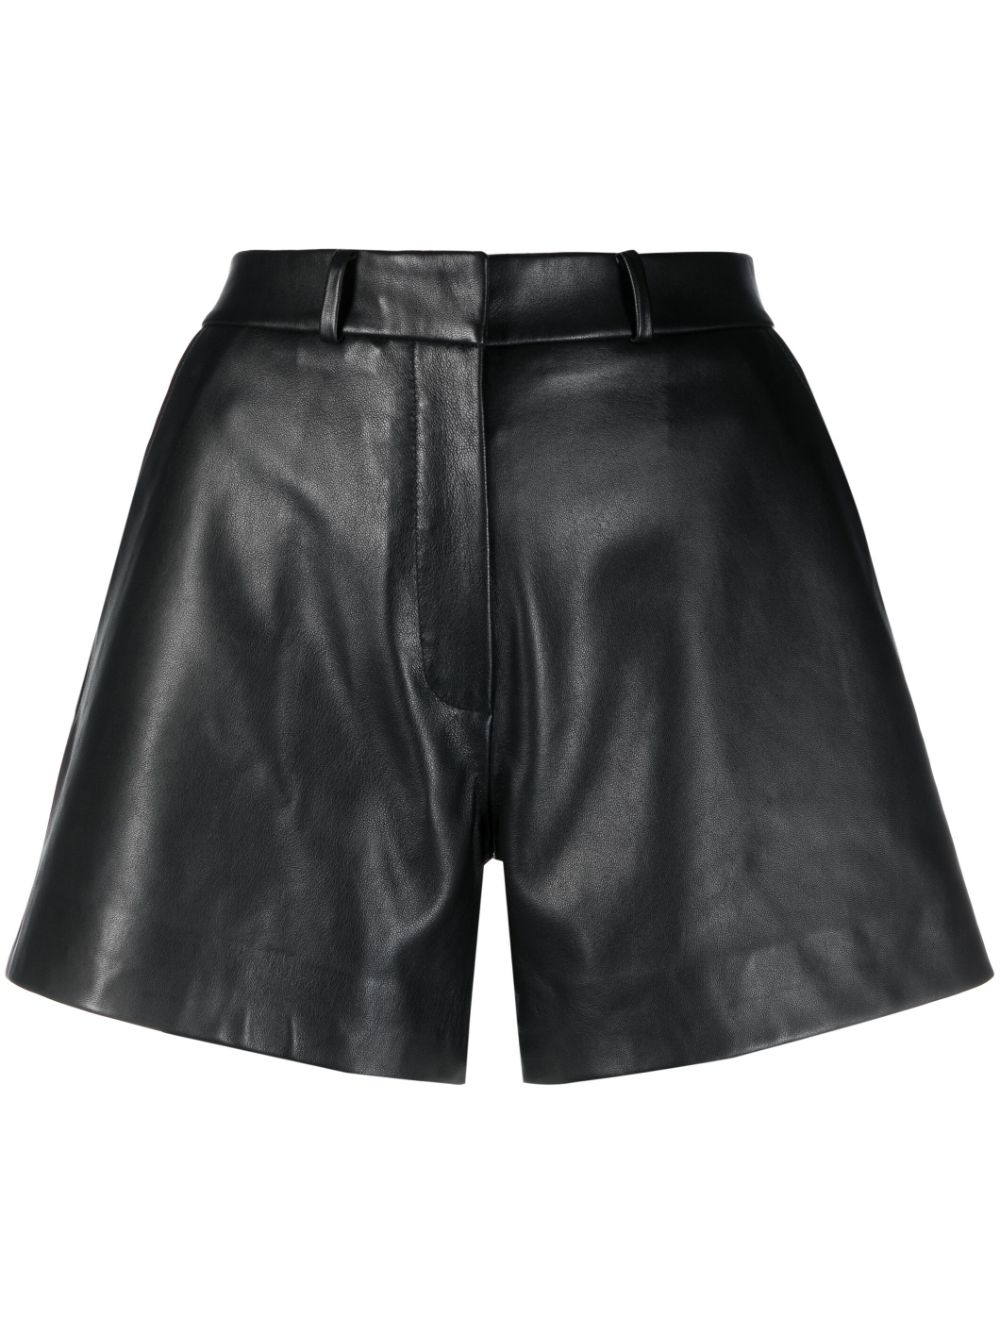 Claudie Pierlot mid-rise leather shorts - Black von Claudie Pierlot